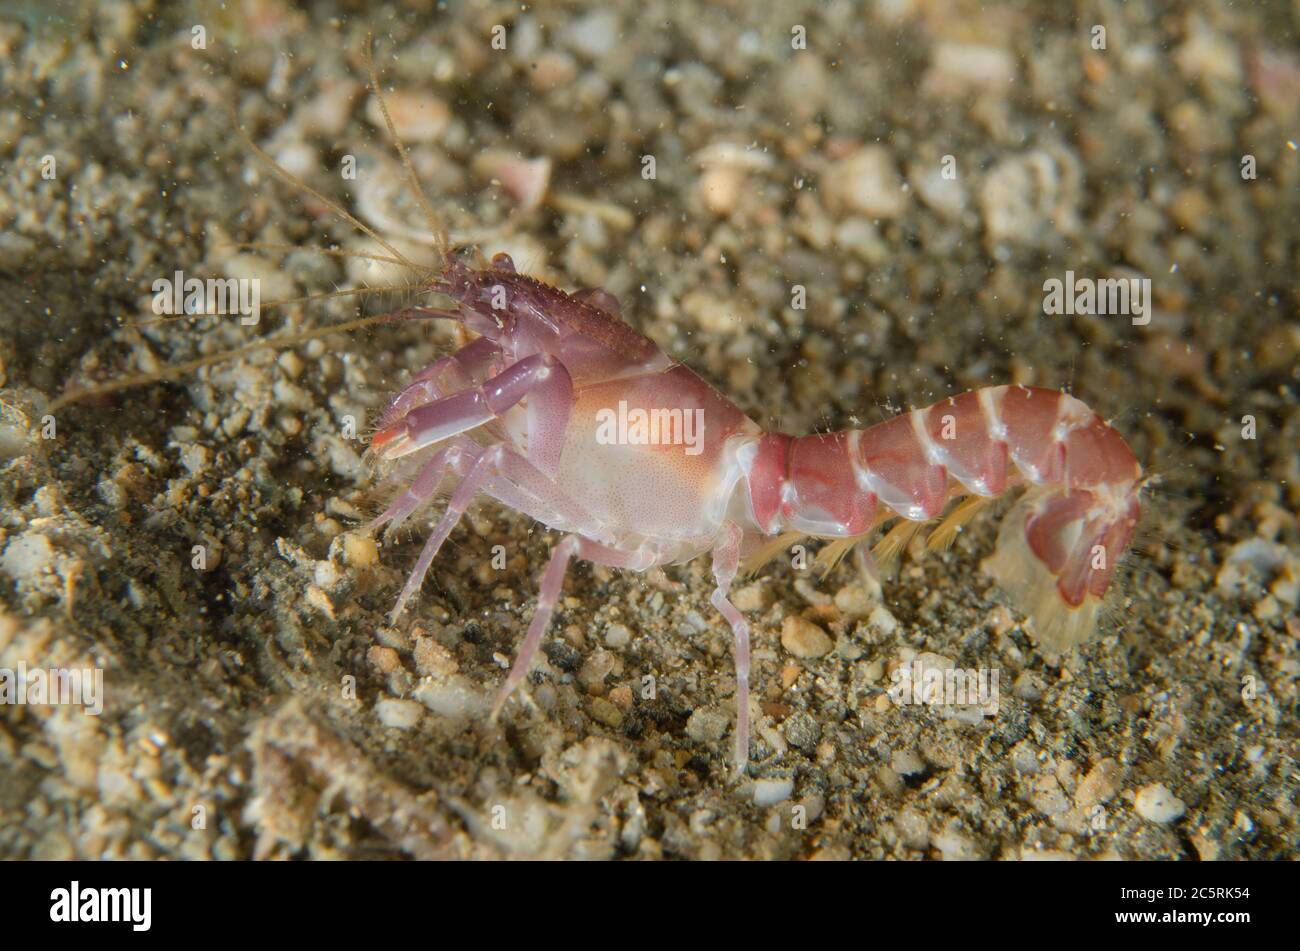 Snapping Shrimp, Alpheus frontalis, on sand, night dive, Tasi Tolu dive site, Dili, East Timor Stock Photo